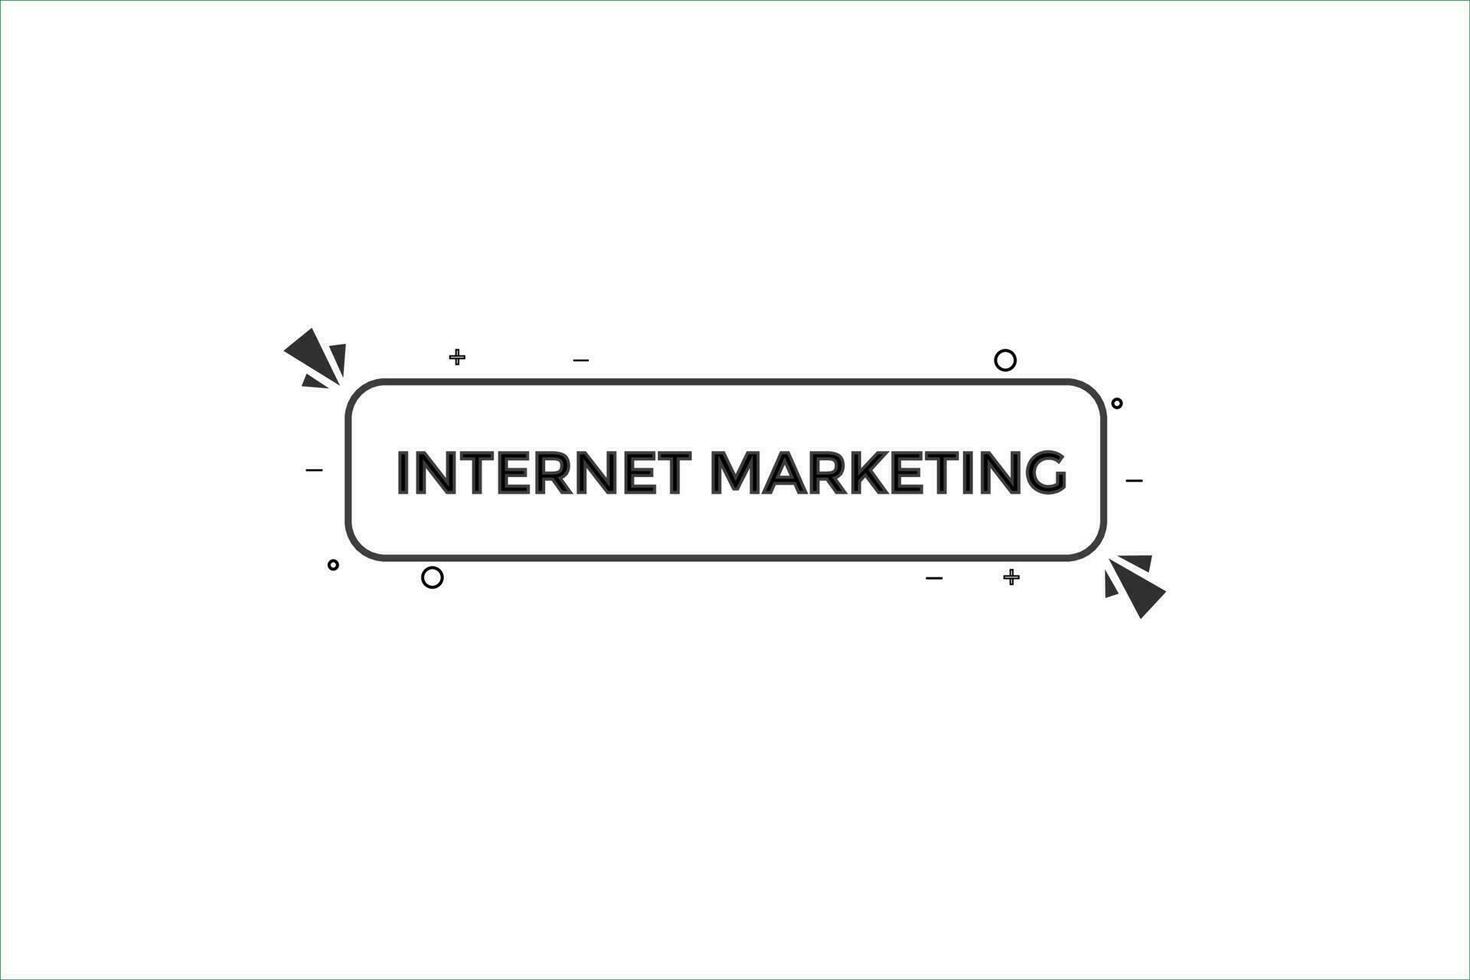 Internet márketing vectores.signo etiqueta burbuja habla Internet marketingl vector